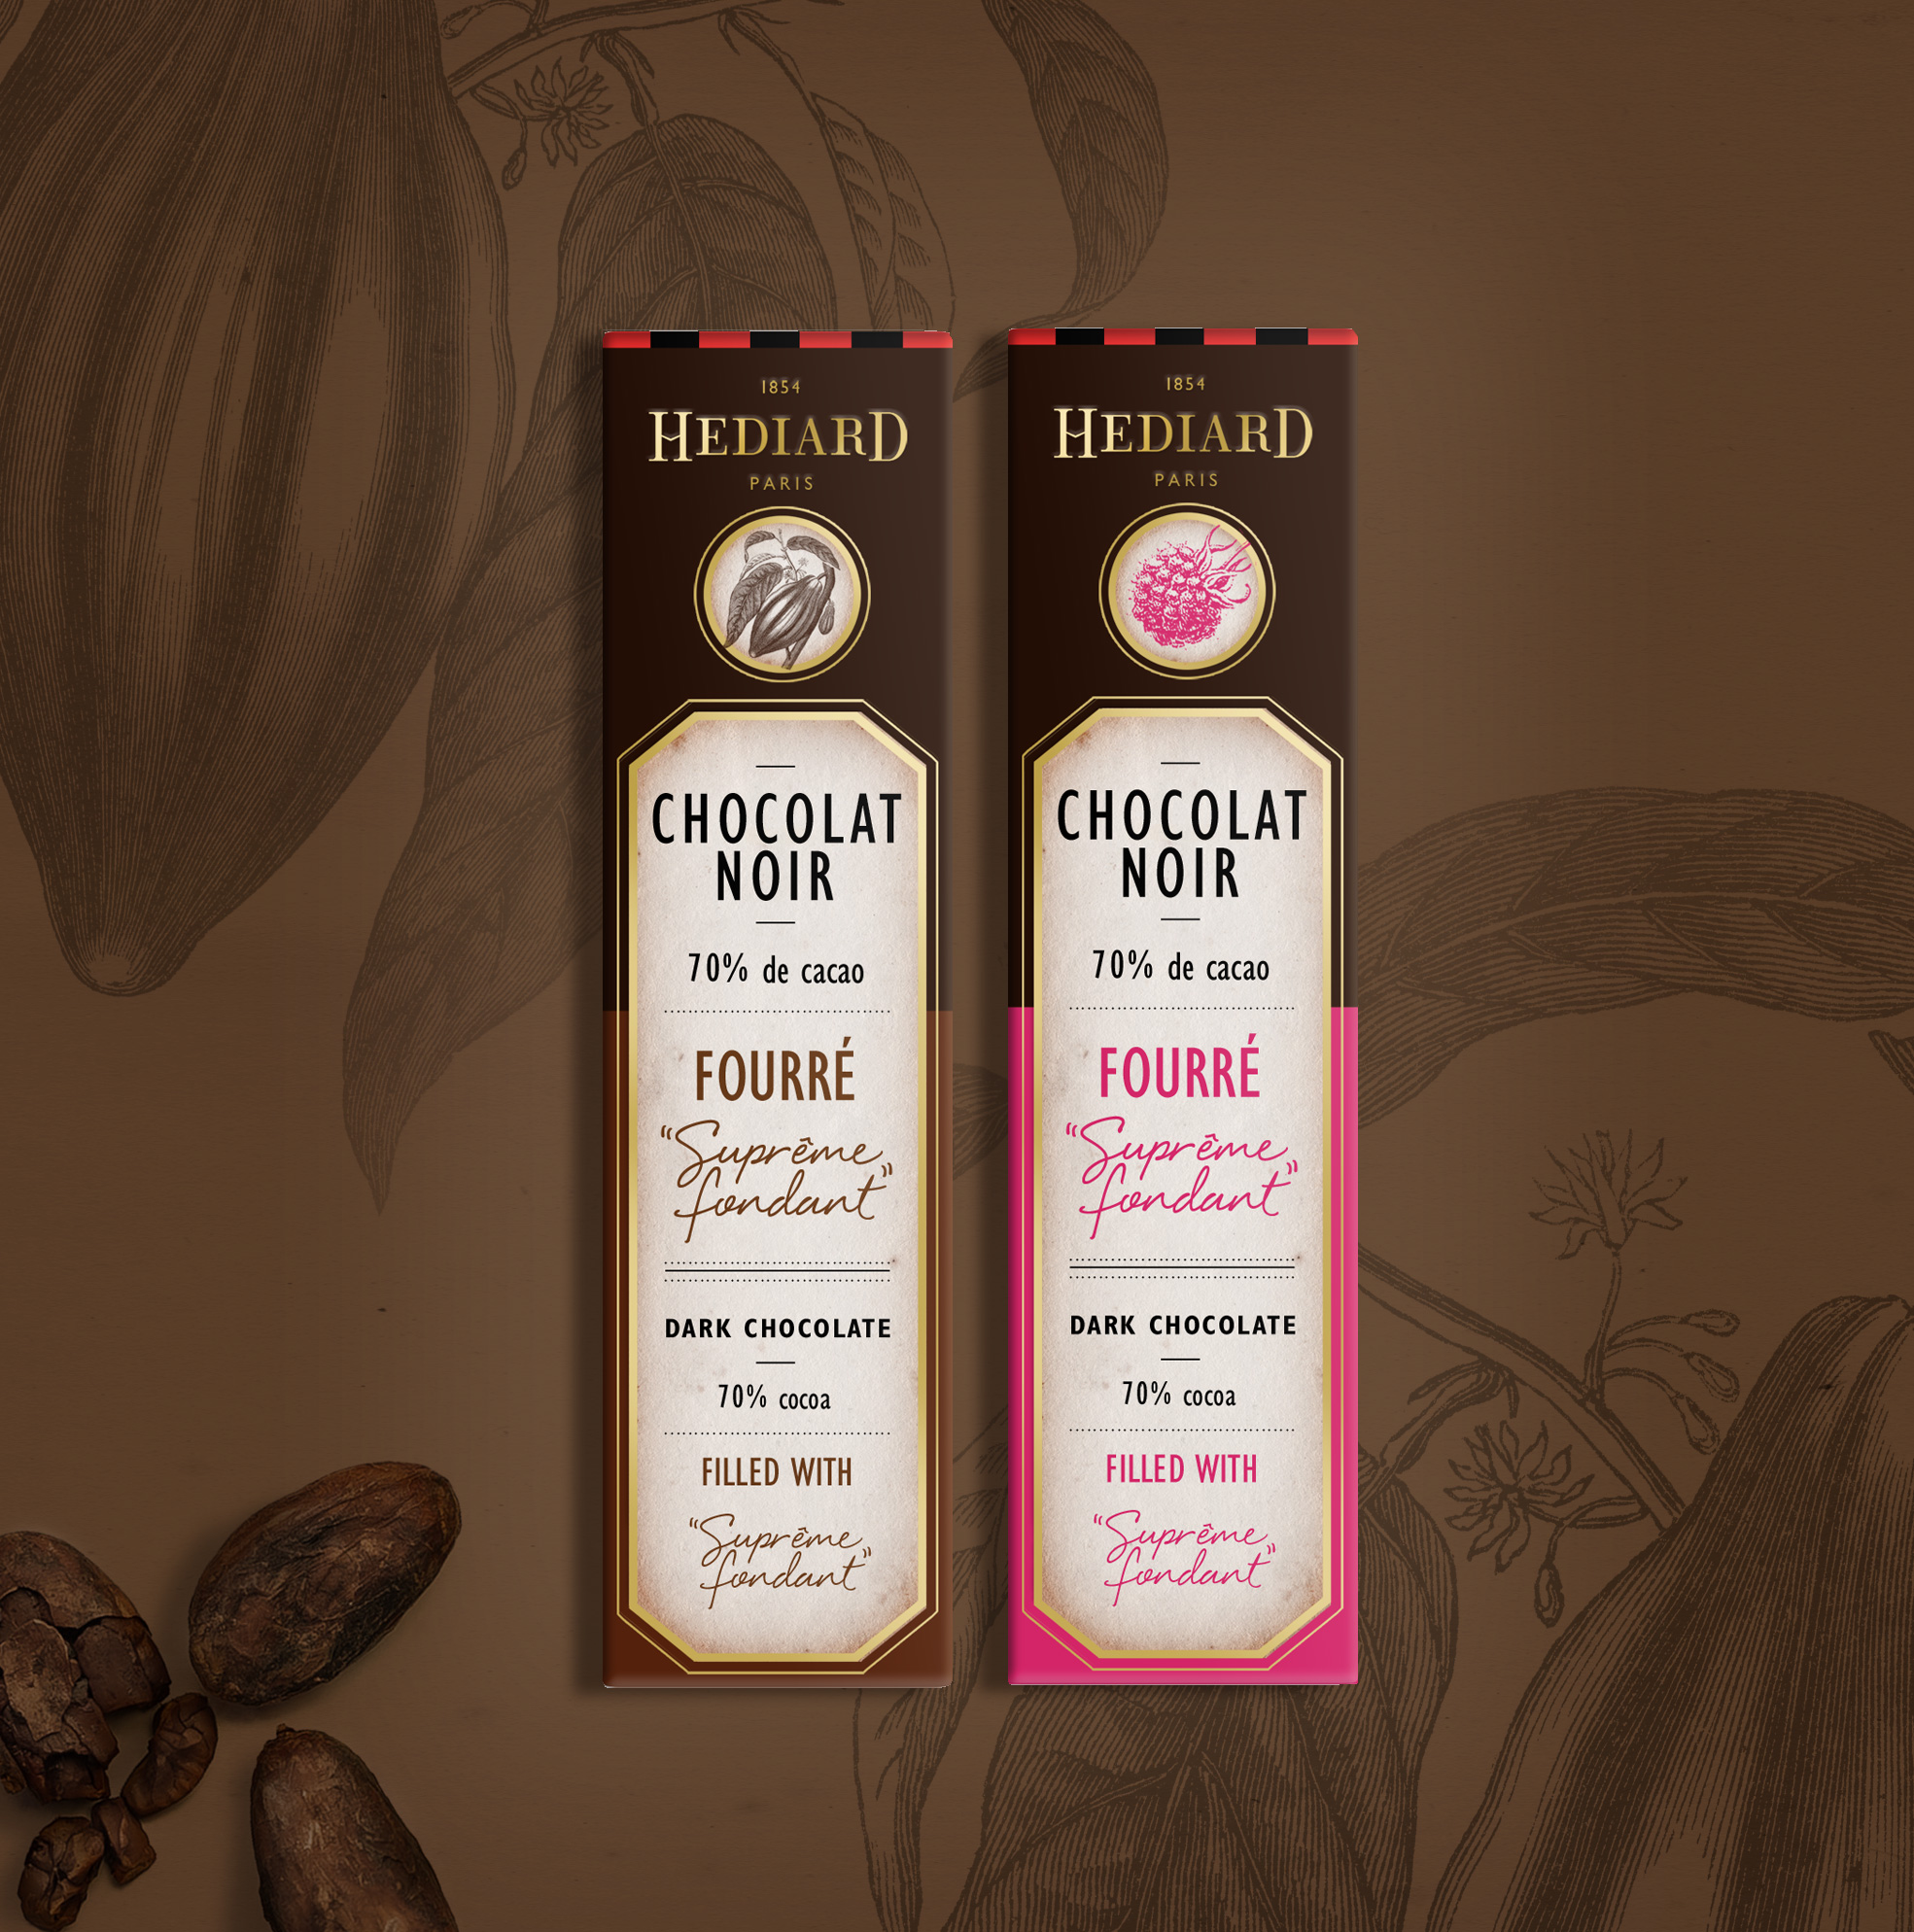 Hediard Luxury Colonial Chocolate Bar Packaging Design by Delatour Design Paris